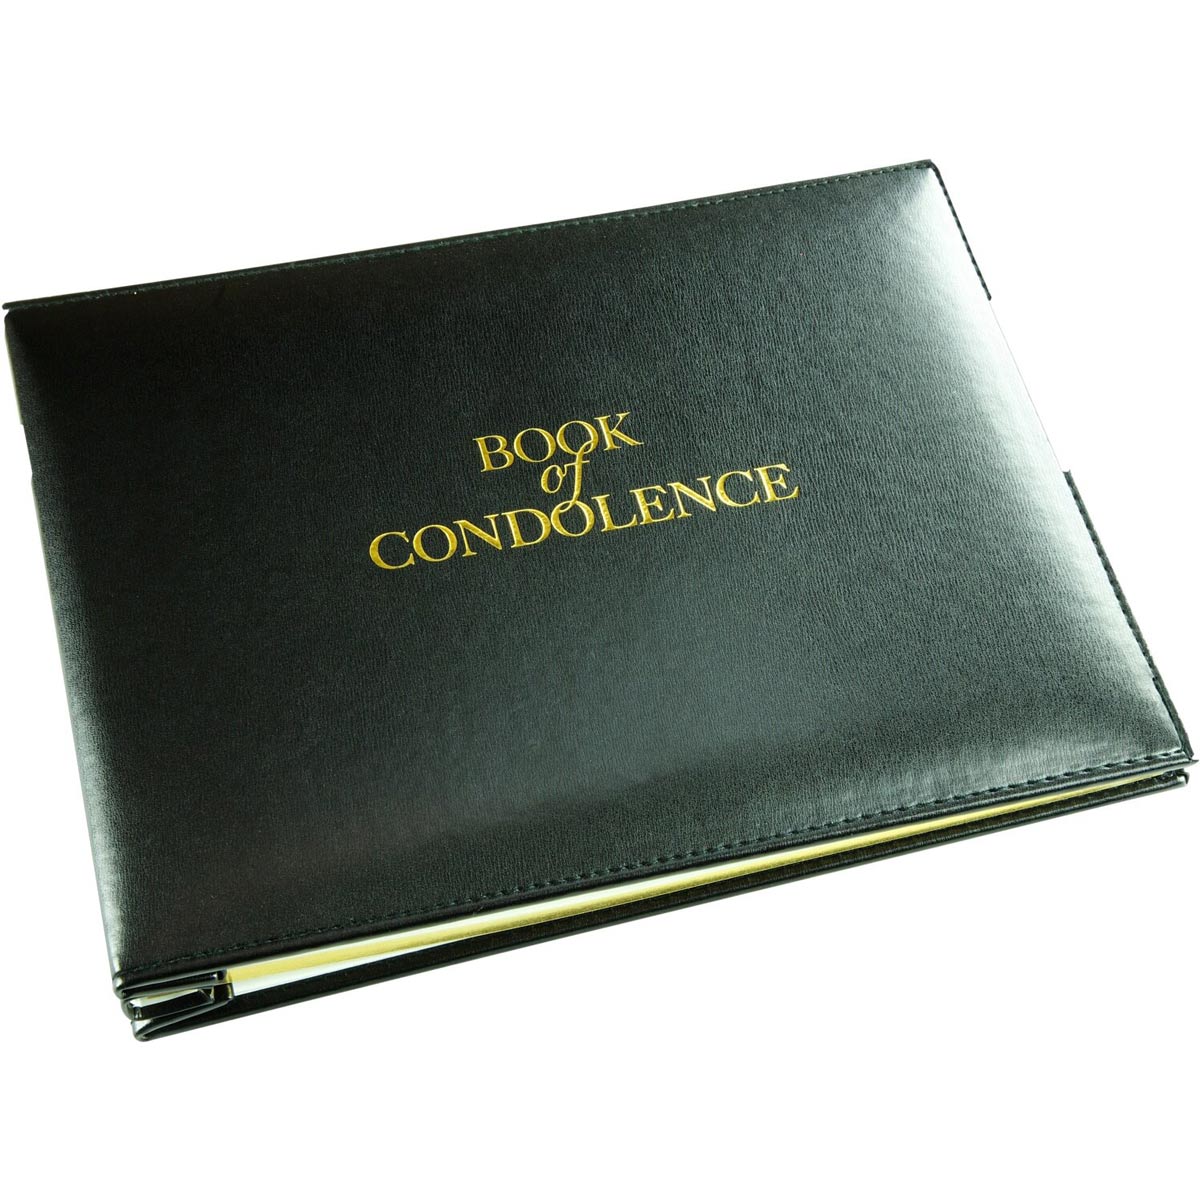 Esposti - Loose Leaf Funeral Book of Condoleance Black met presentatiebox EL59